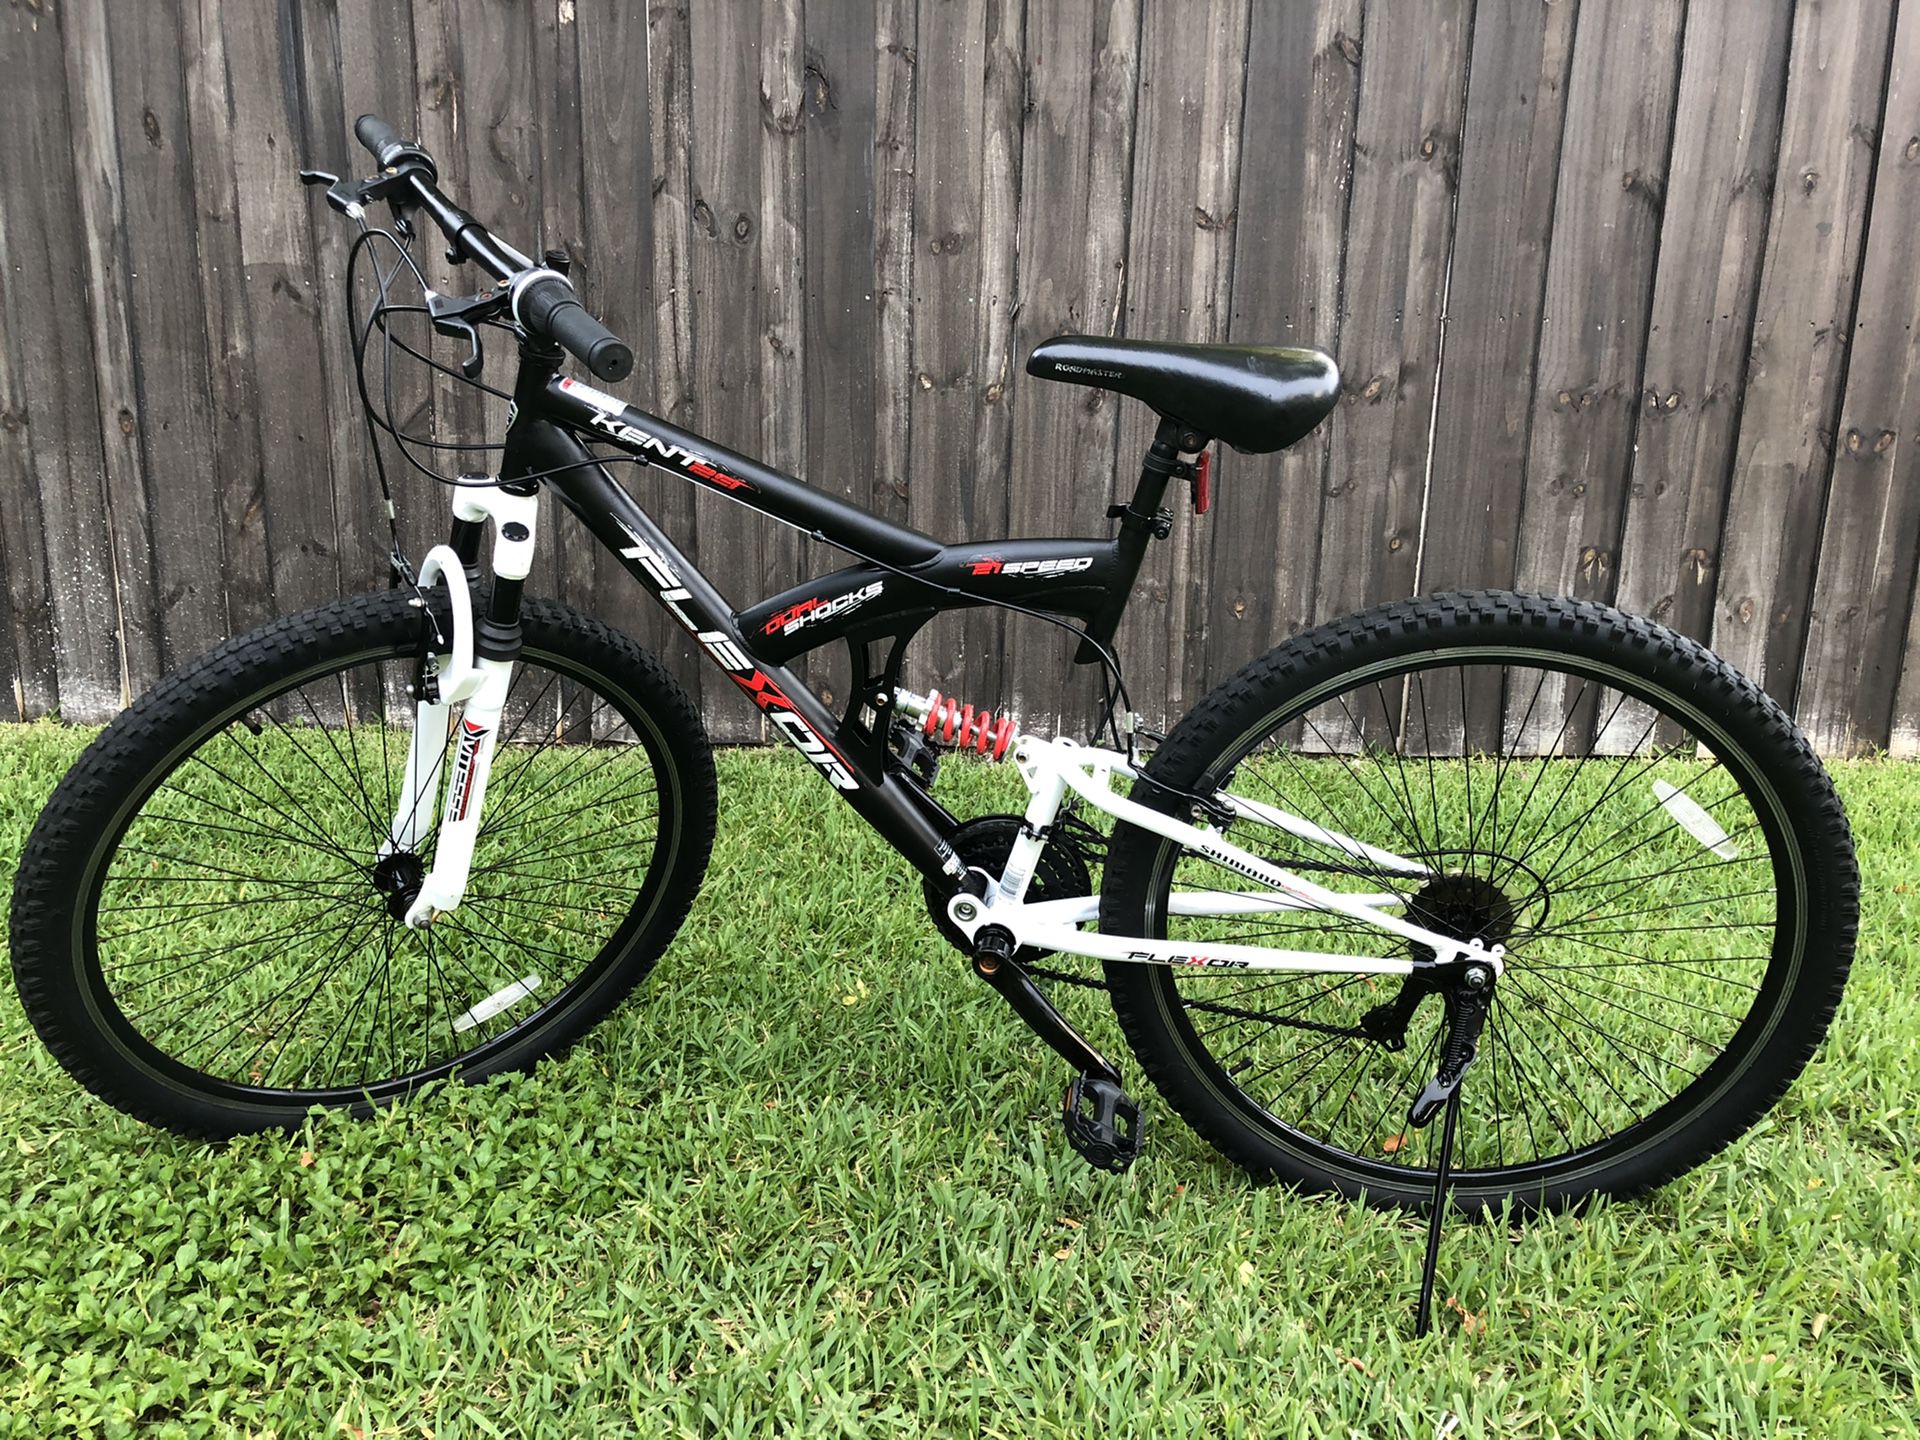 29” Mountain Bike 21 speeds like new for sale!